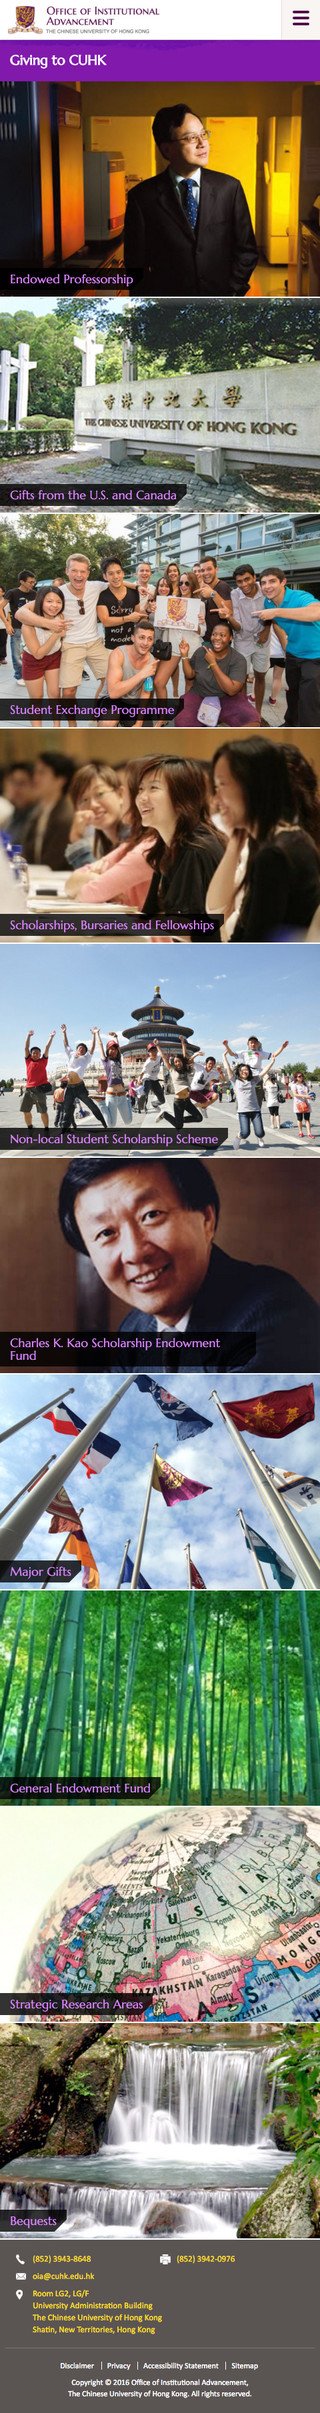 Chinese University of Hong Kong website screenshot for mobile version 4 of 5